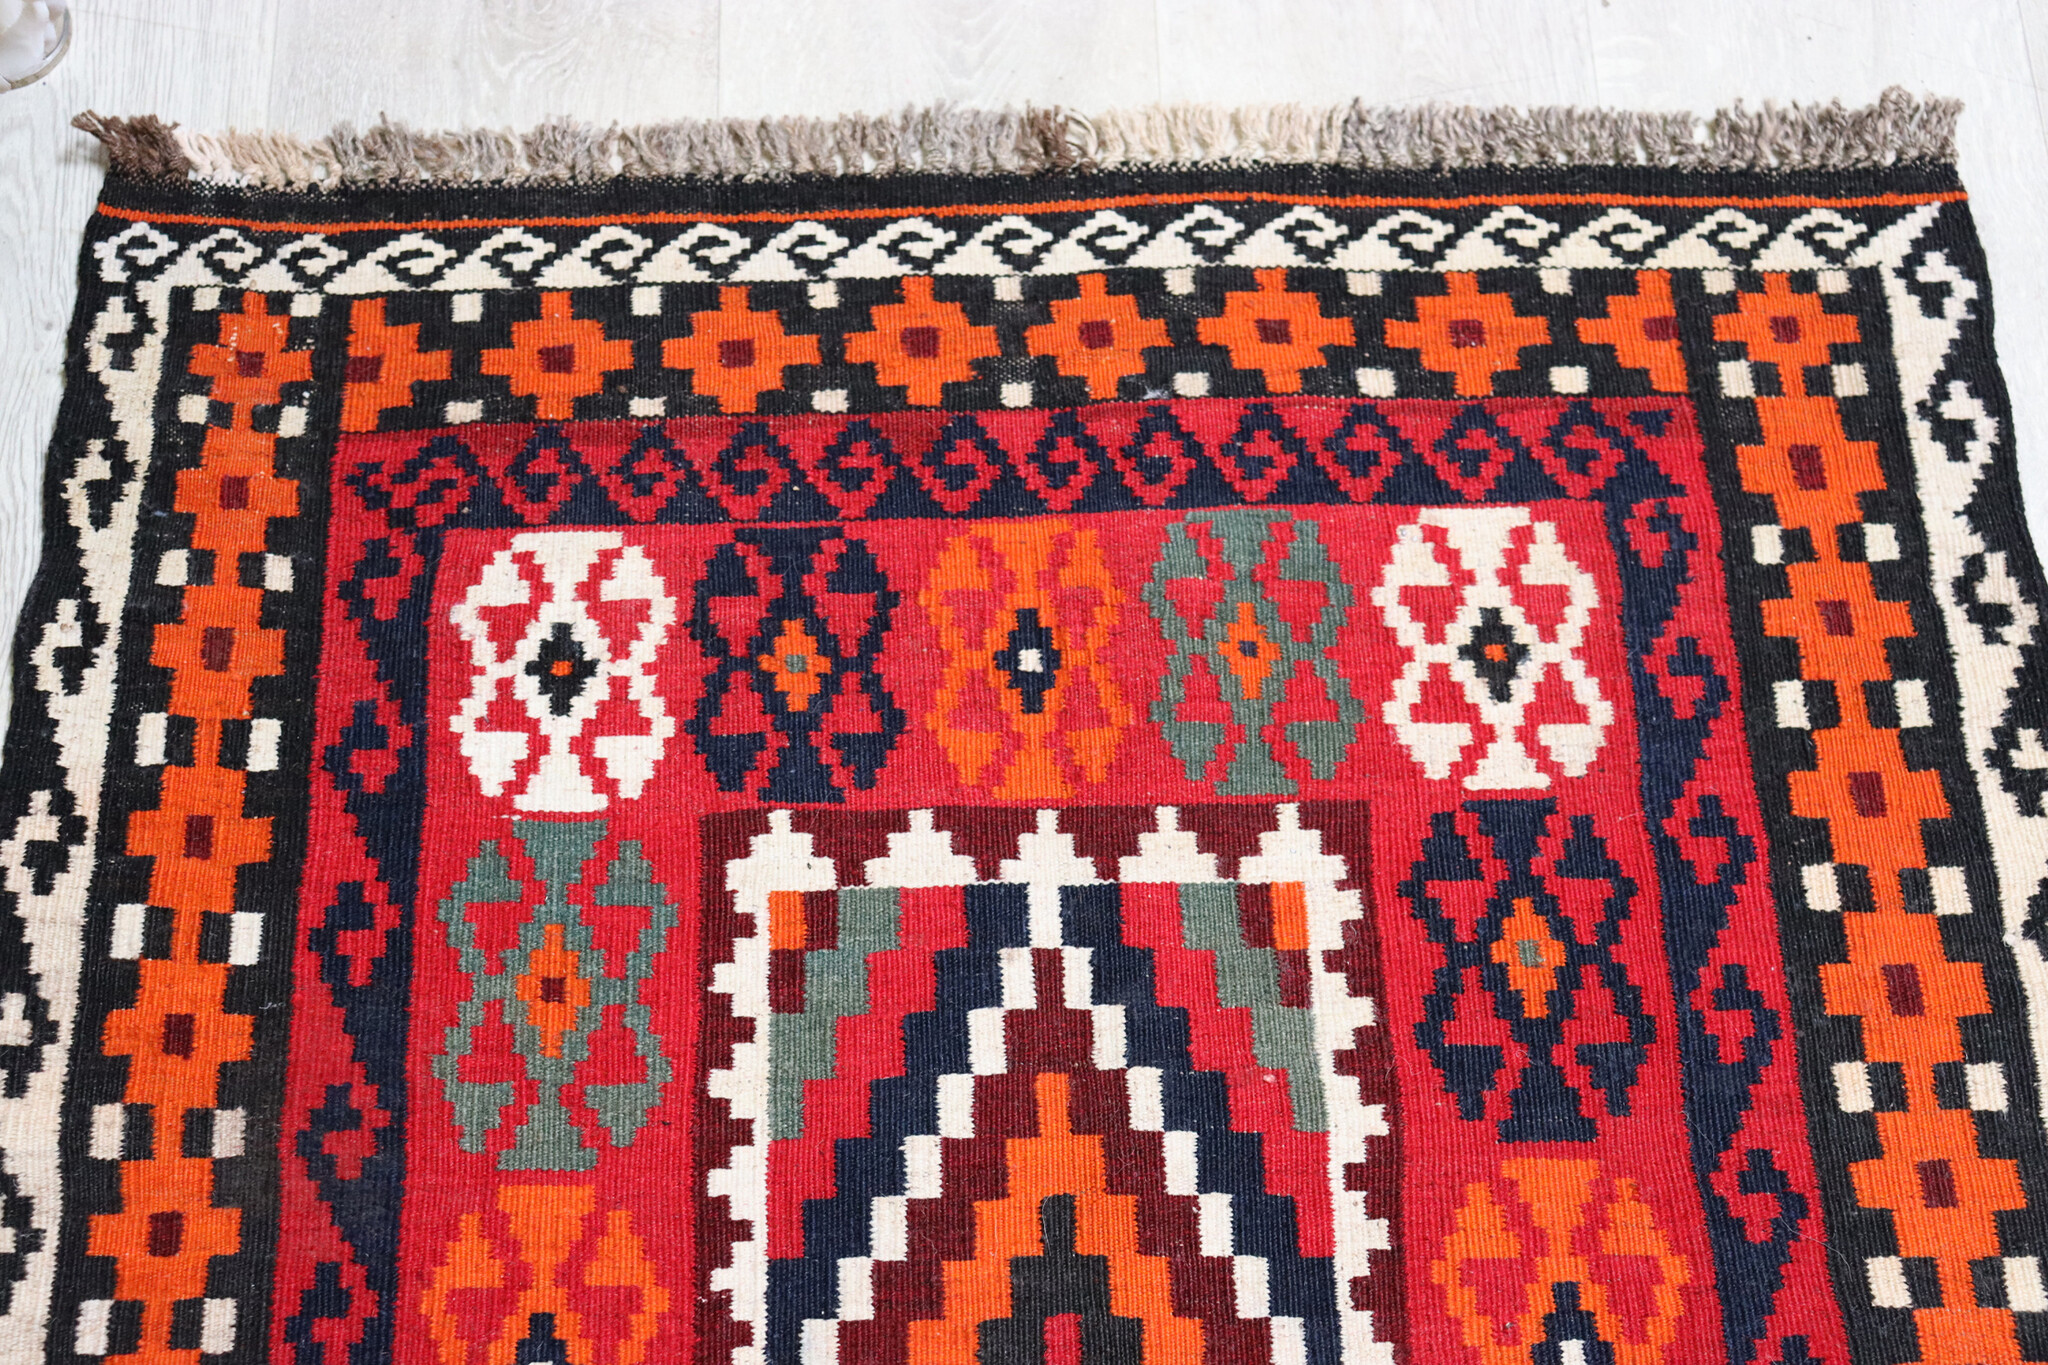 113x85 cm Afghan   nomadic Kilim rug  No:122